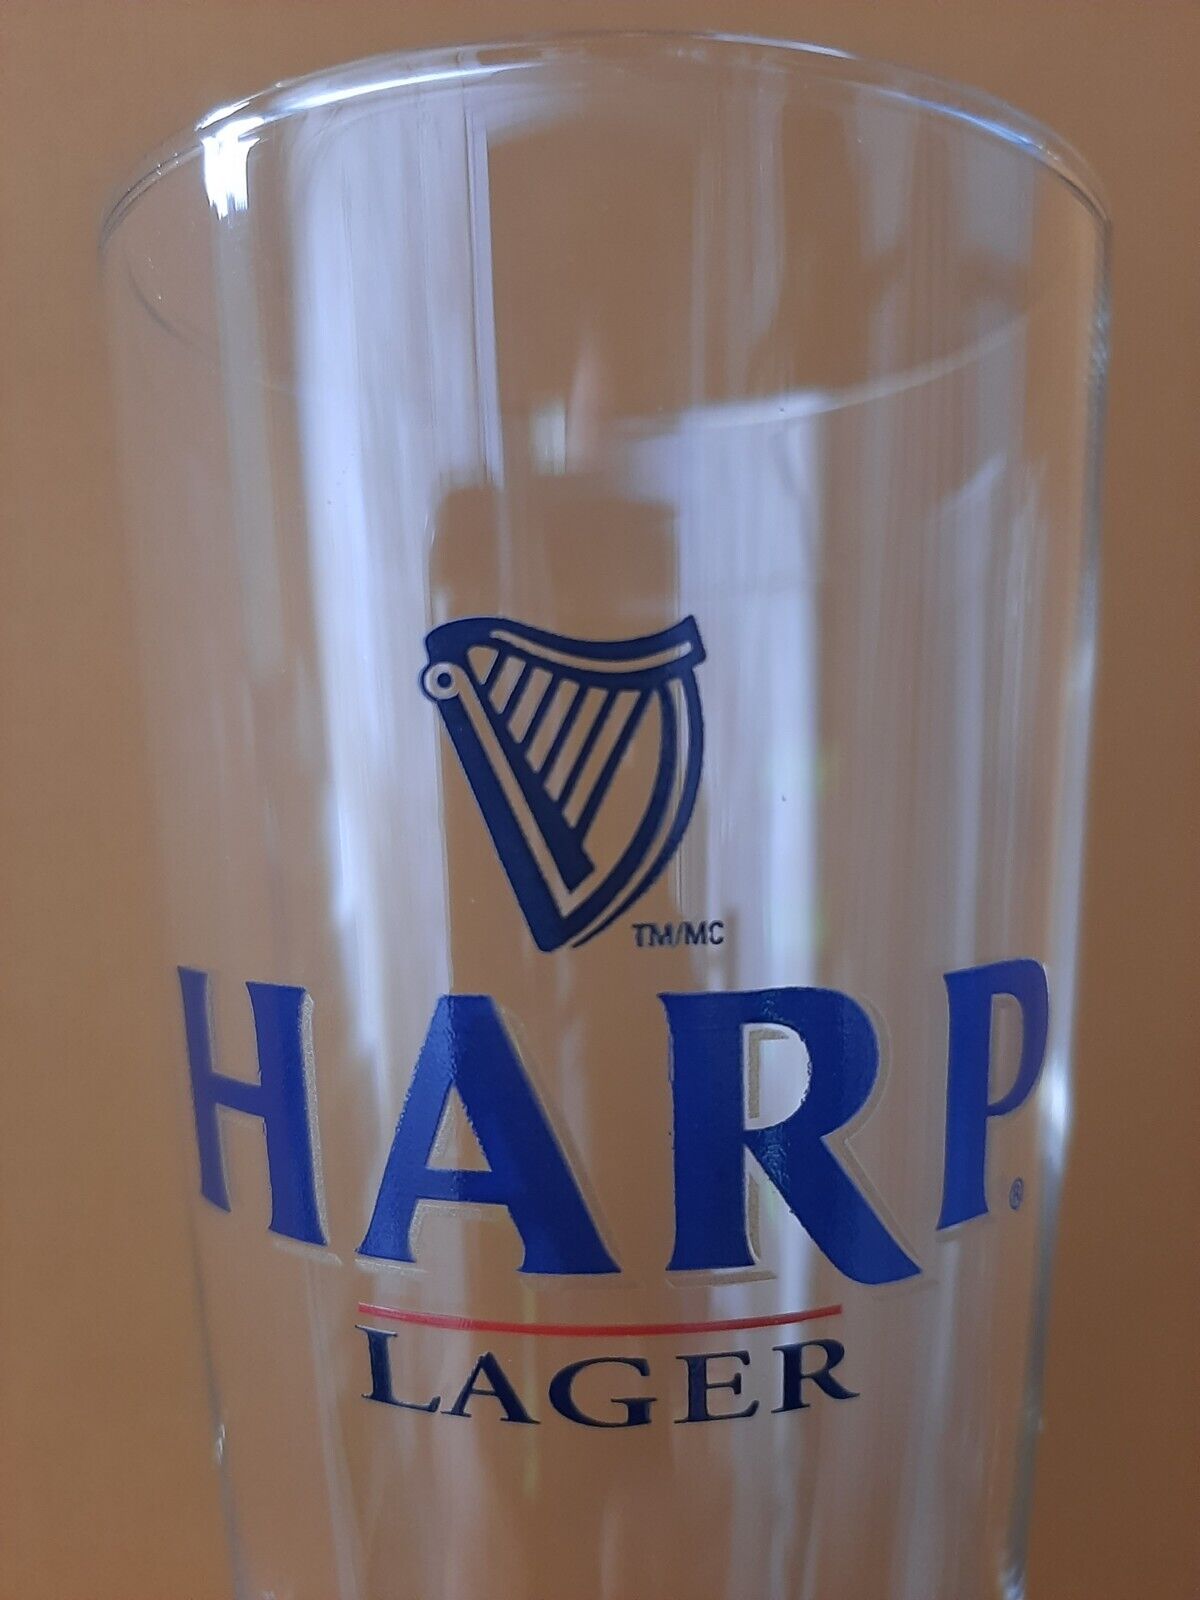 *GLASS LOT* (4) HARP LAGER 0.3L 